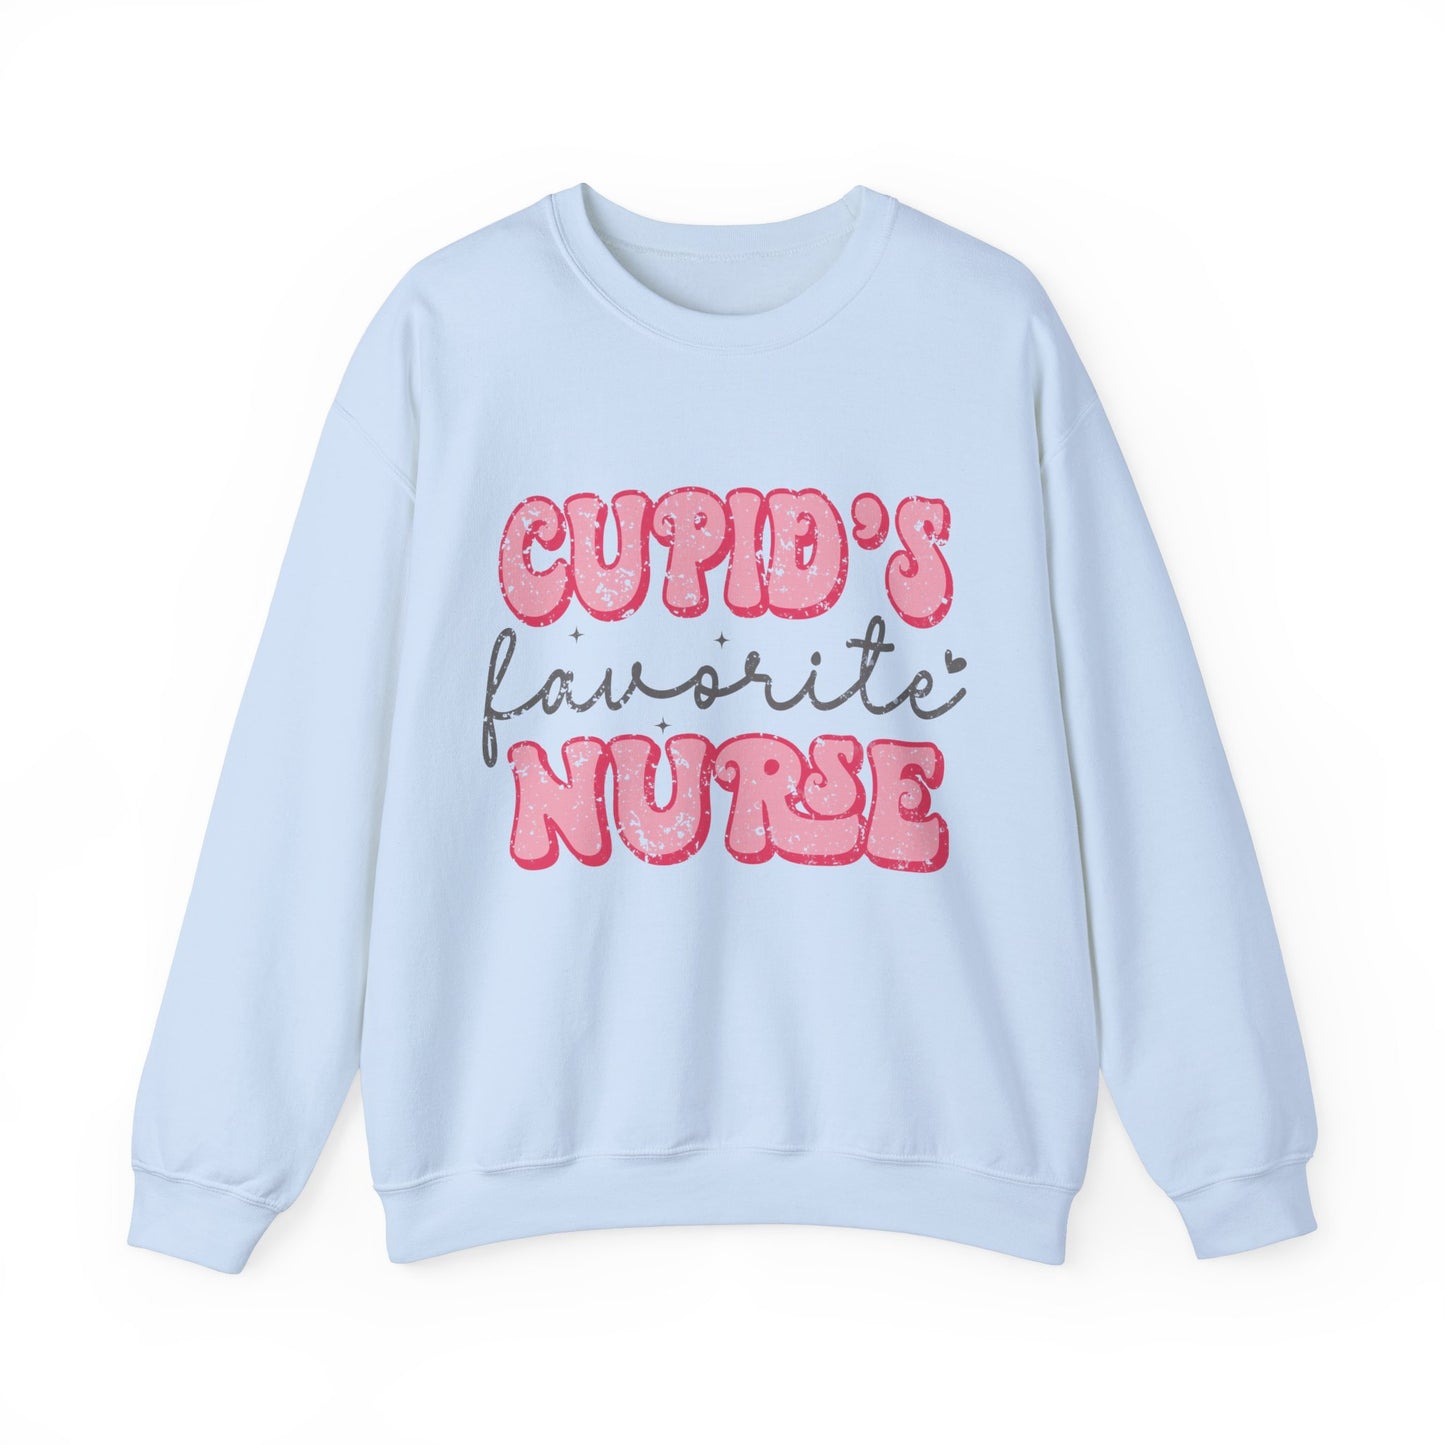 Cupid's Favorite Nurse Women's Sweatshirt